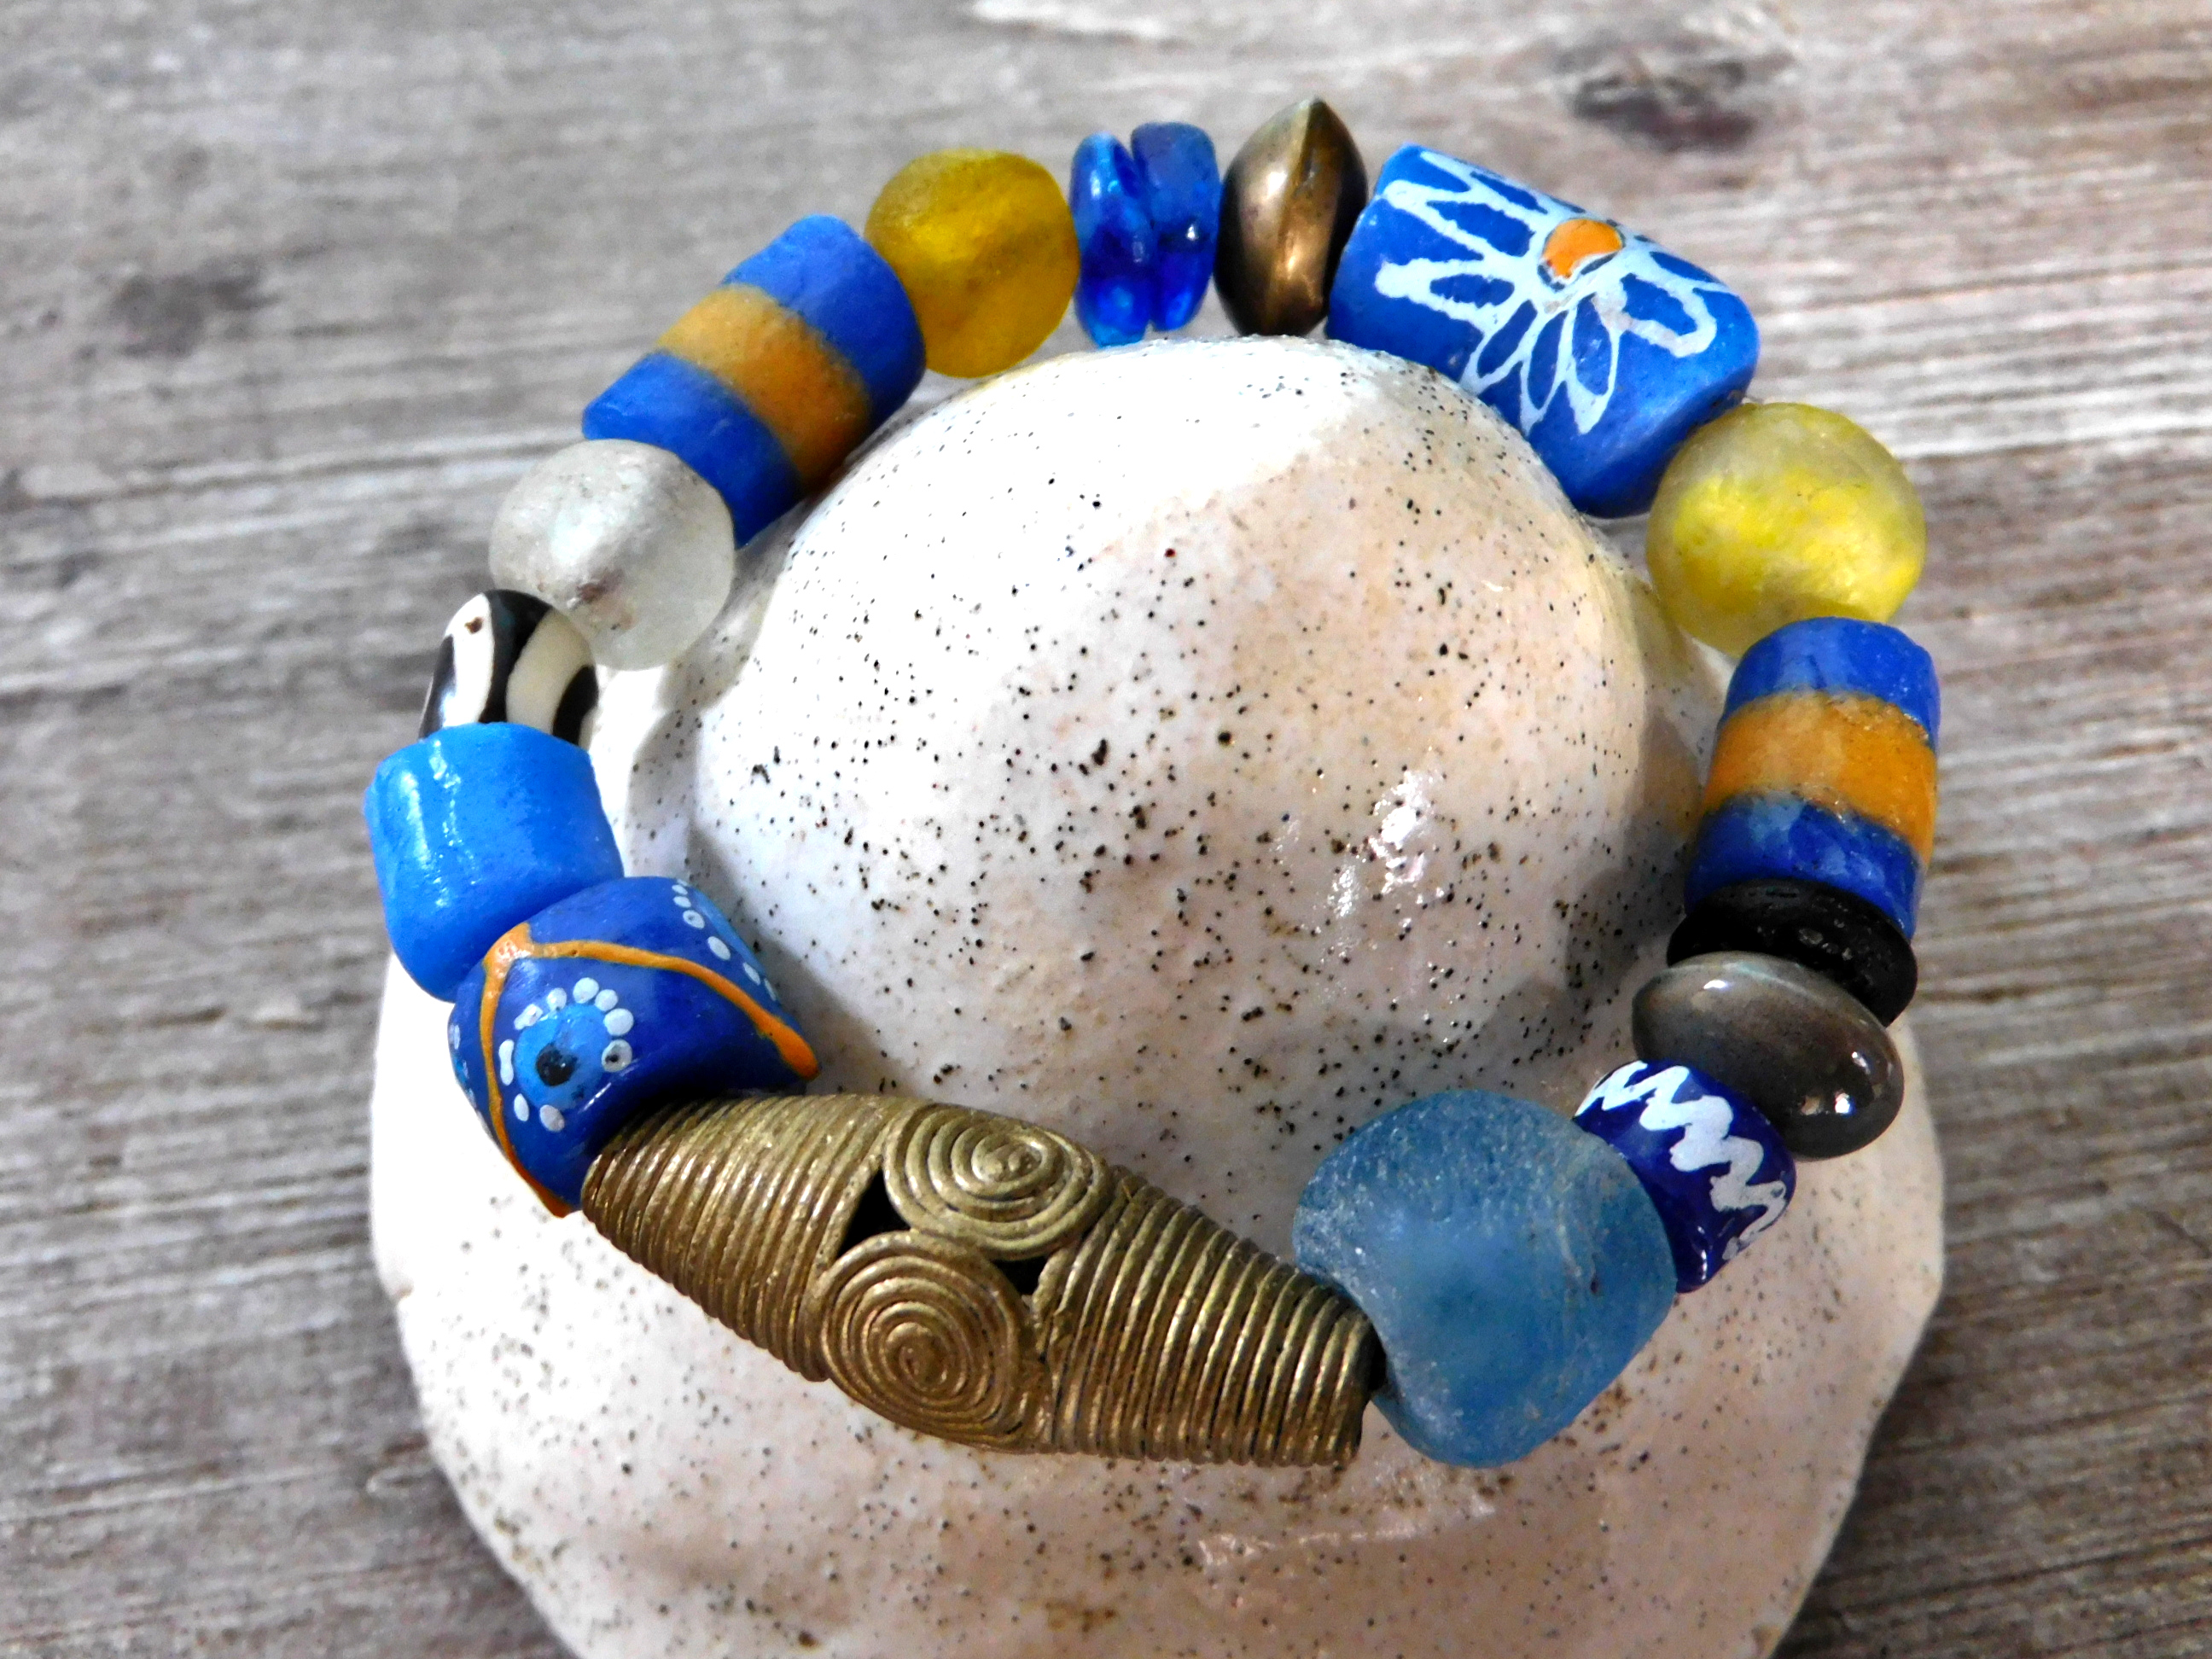 afrikanisches Armband - blau, gelb - Recyclingglas, Messing - elastisch